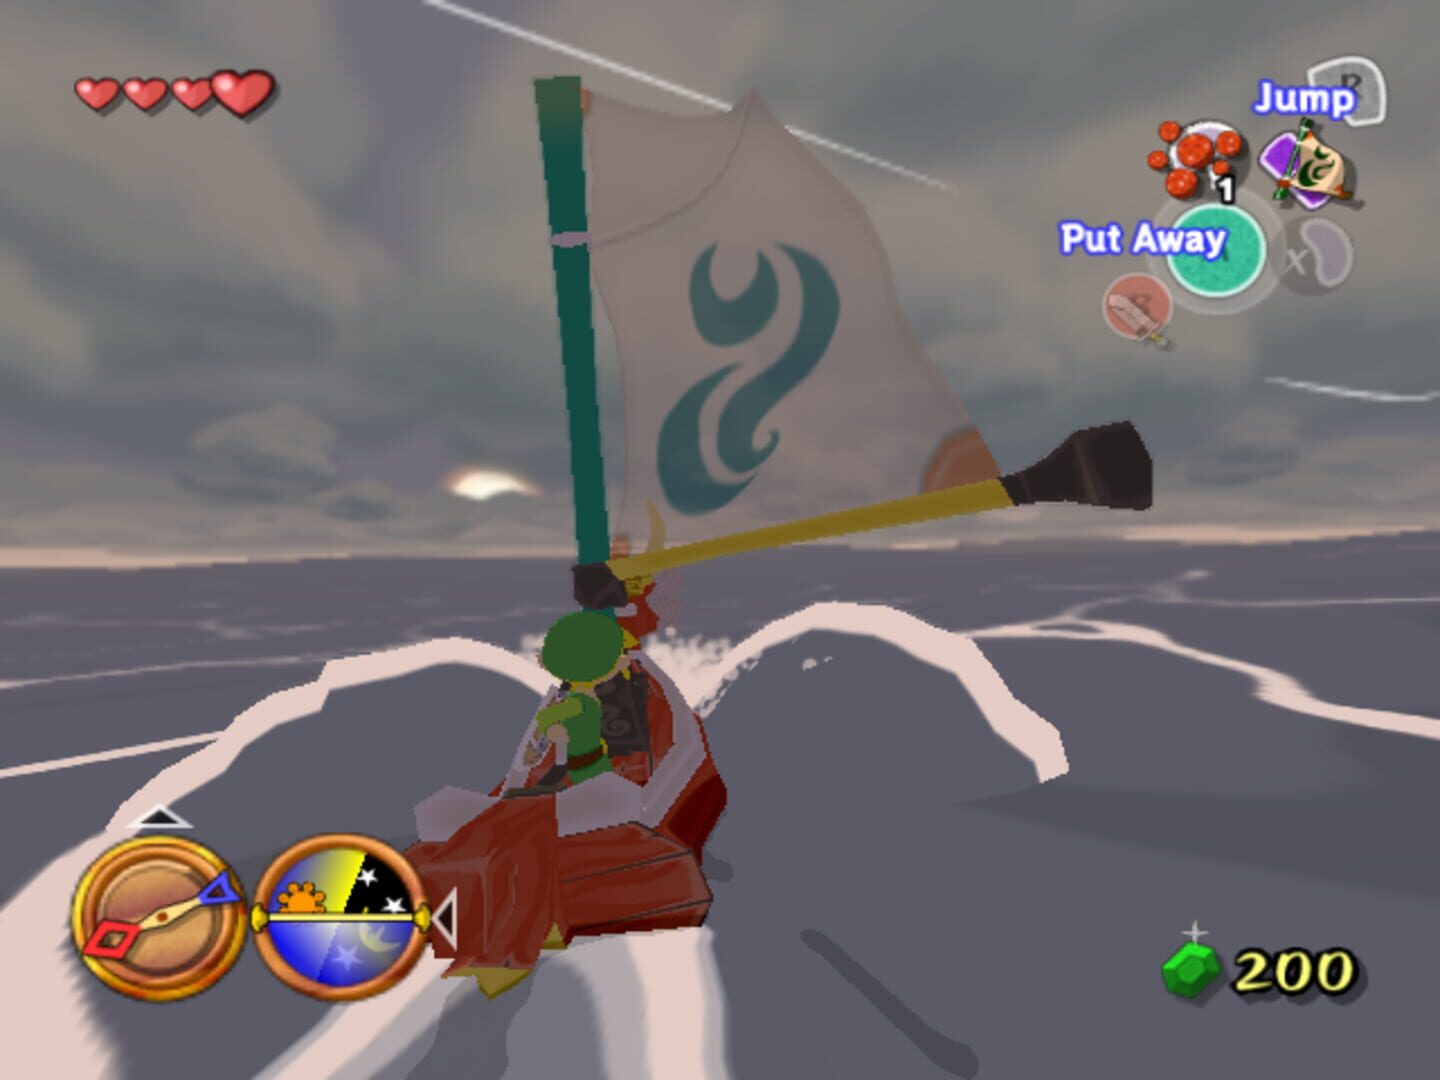 The Legend of Zelda: The Wind Waker Image